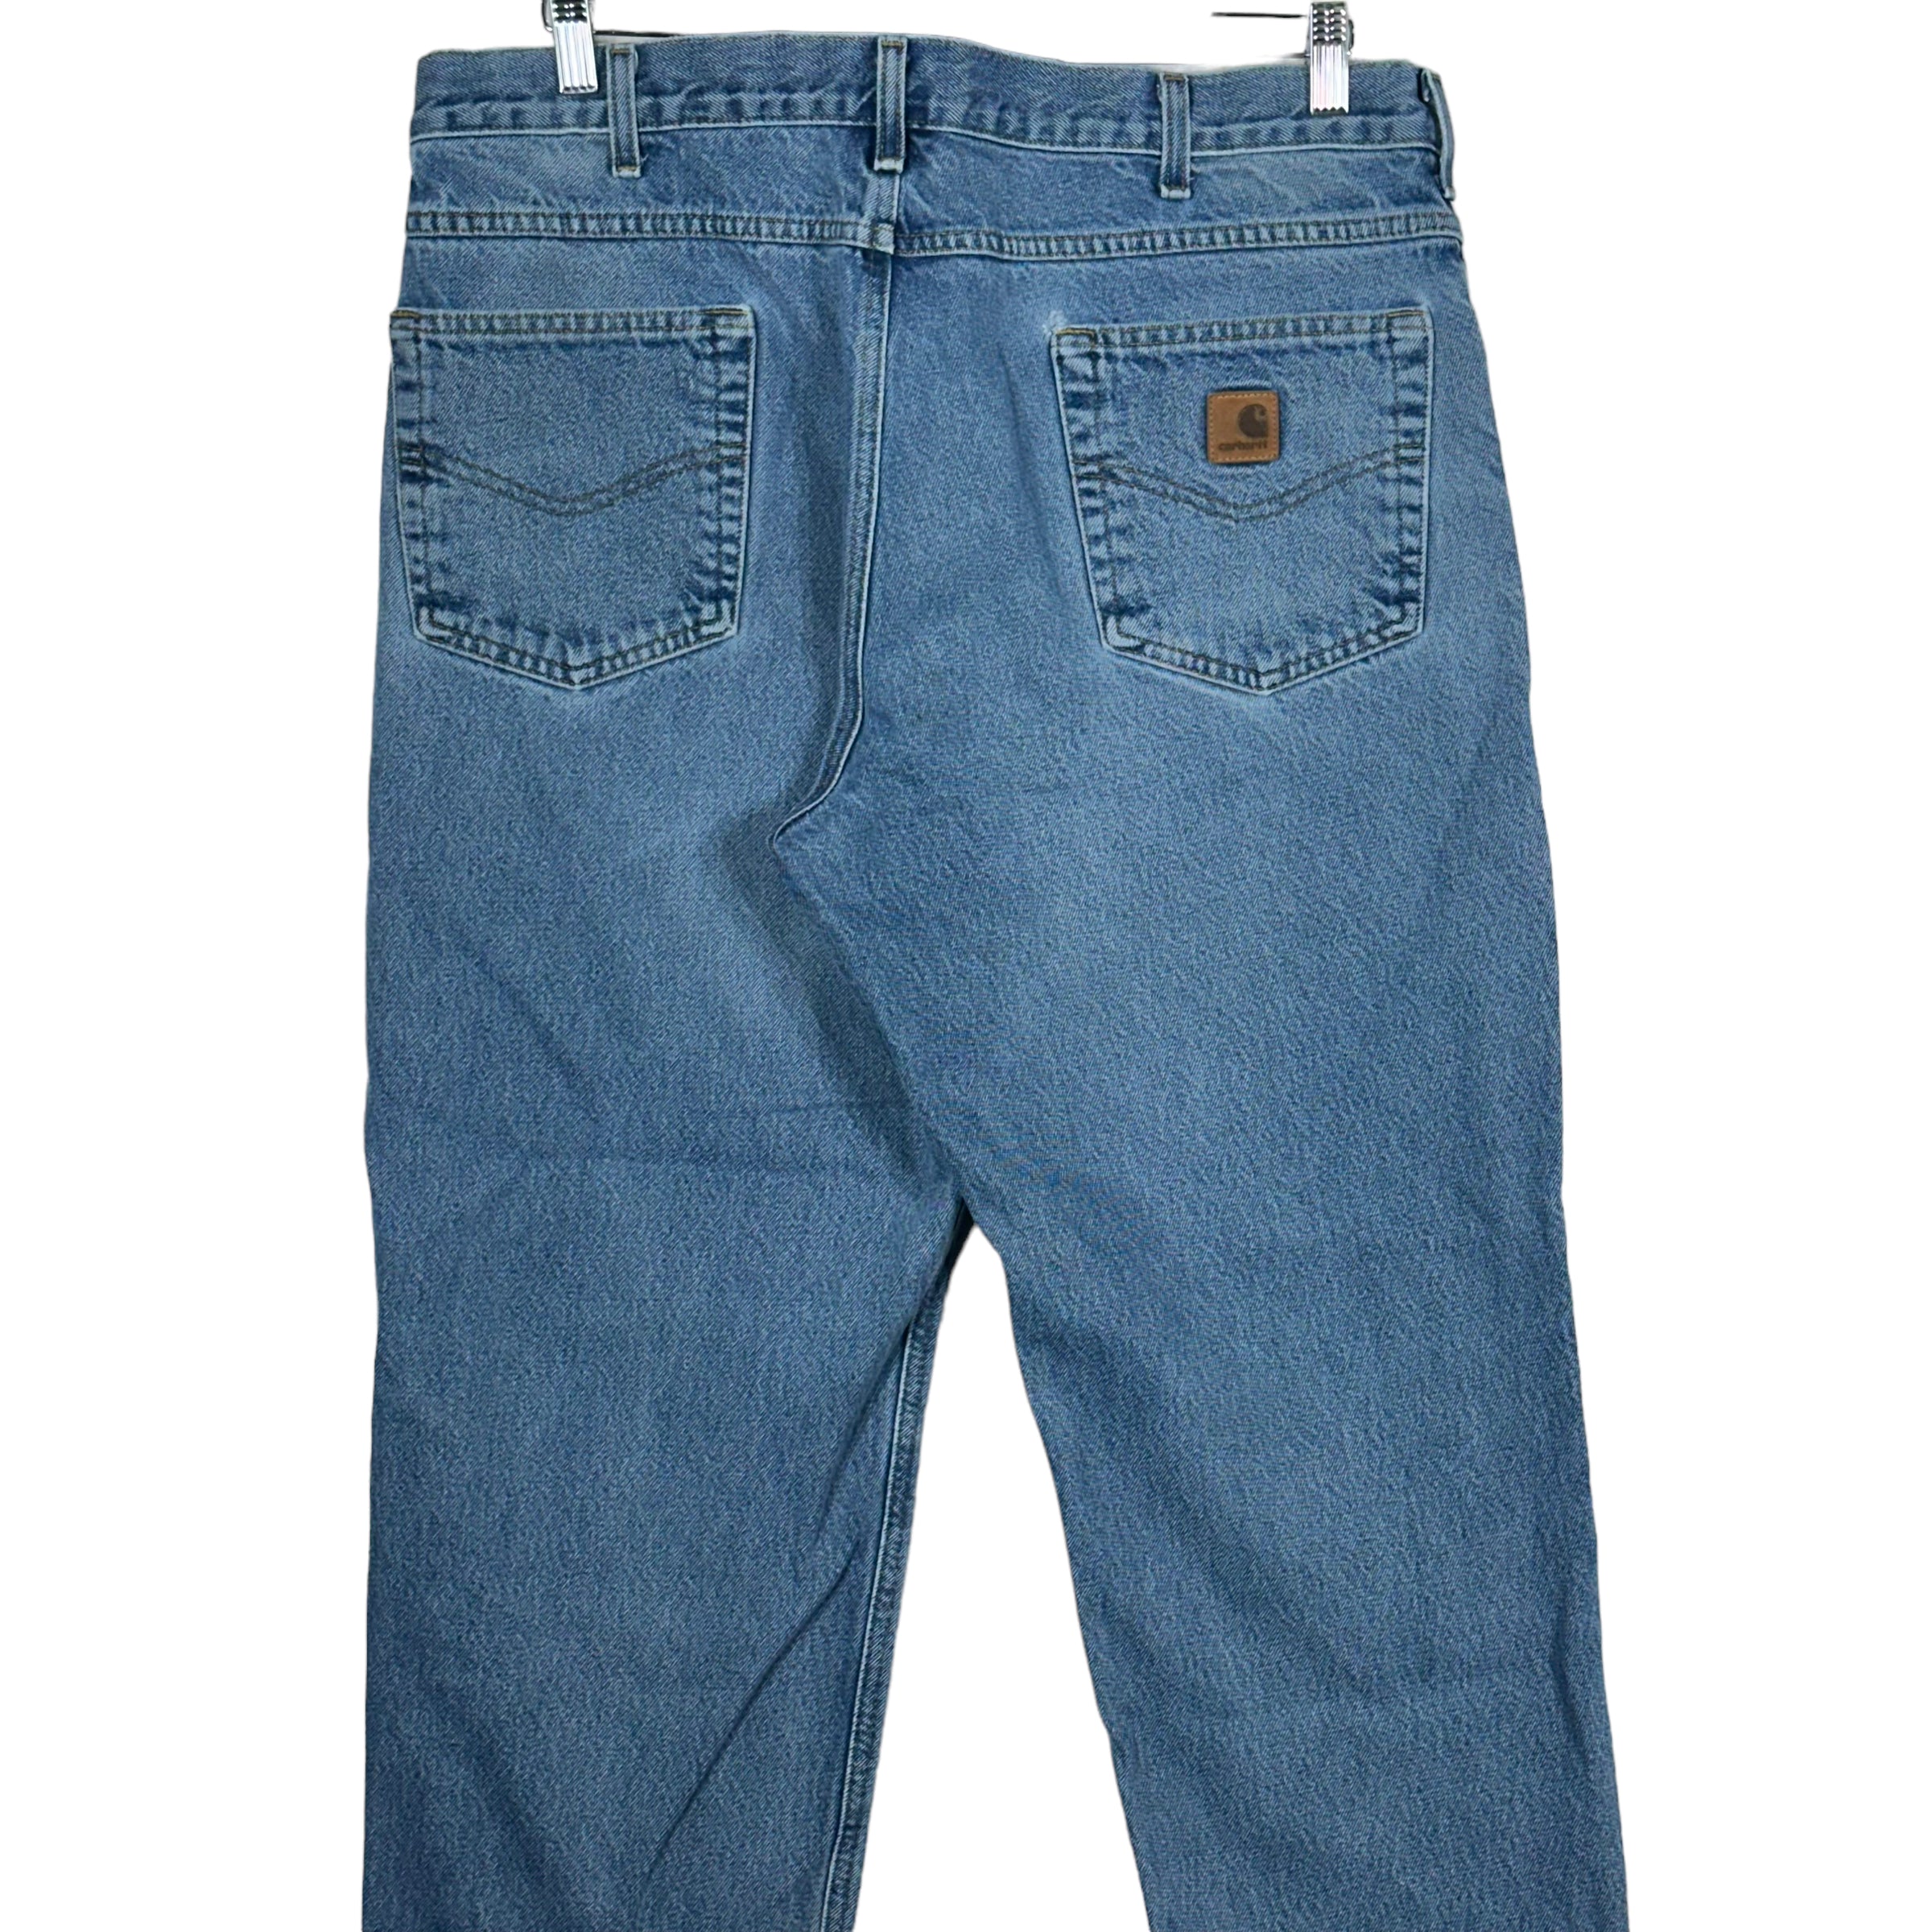 Vintage Carhartt Light Wash Straight Leg Distressed Denim Jeans